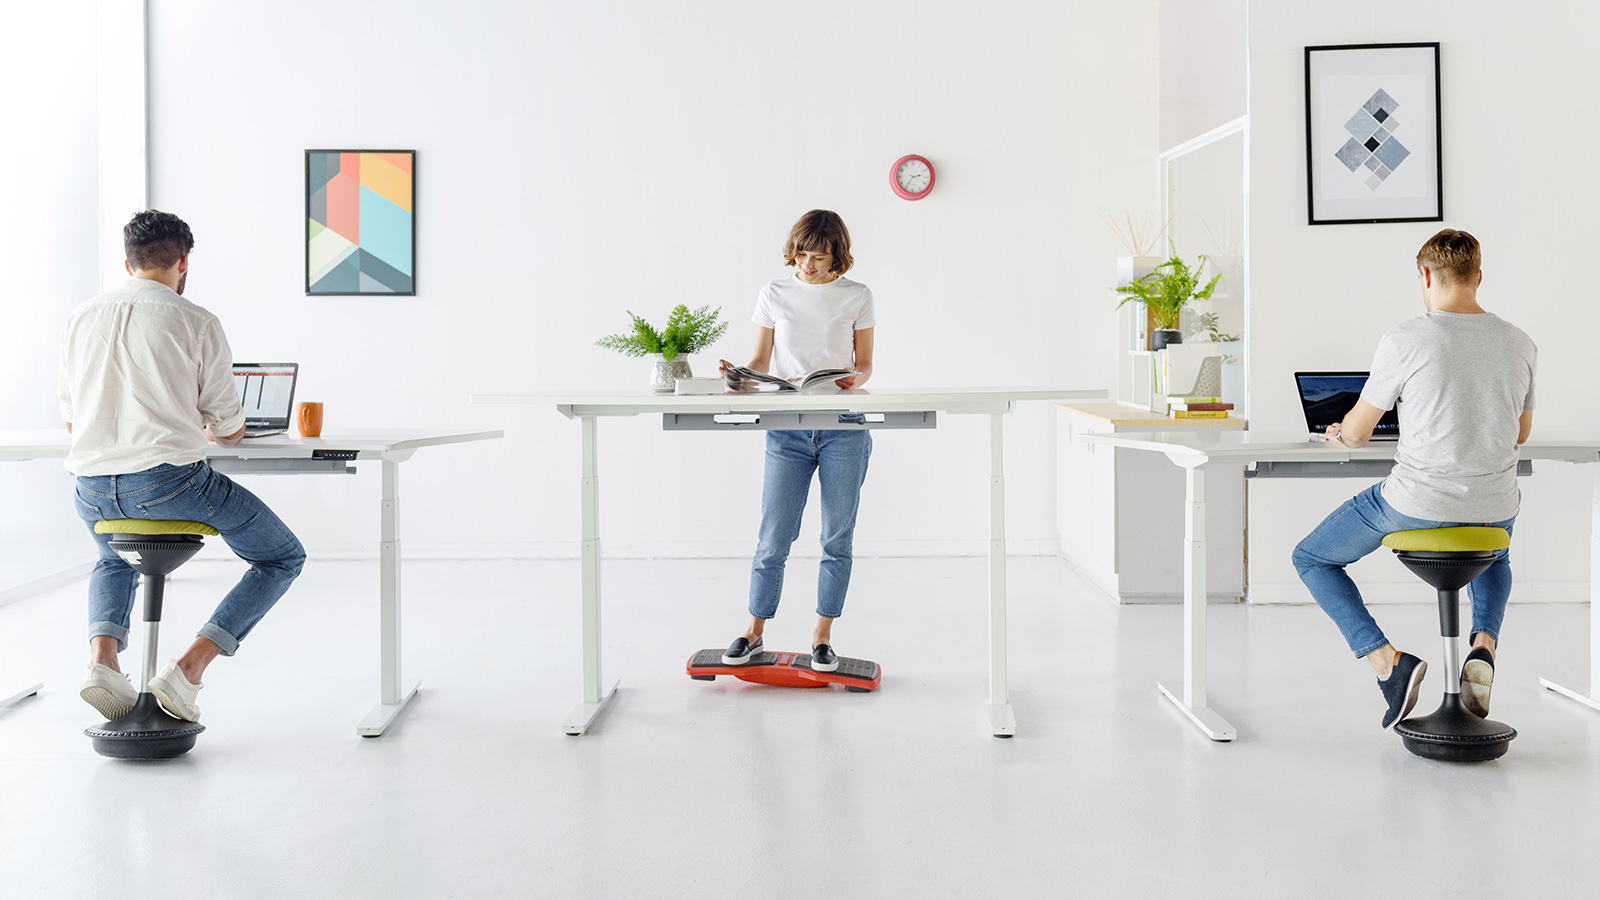 ErgoStool - Best Ergonomic Office Stools For Active Sitting